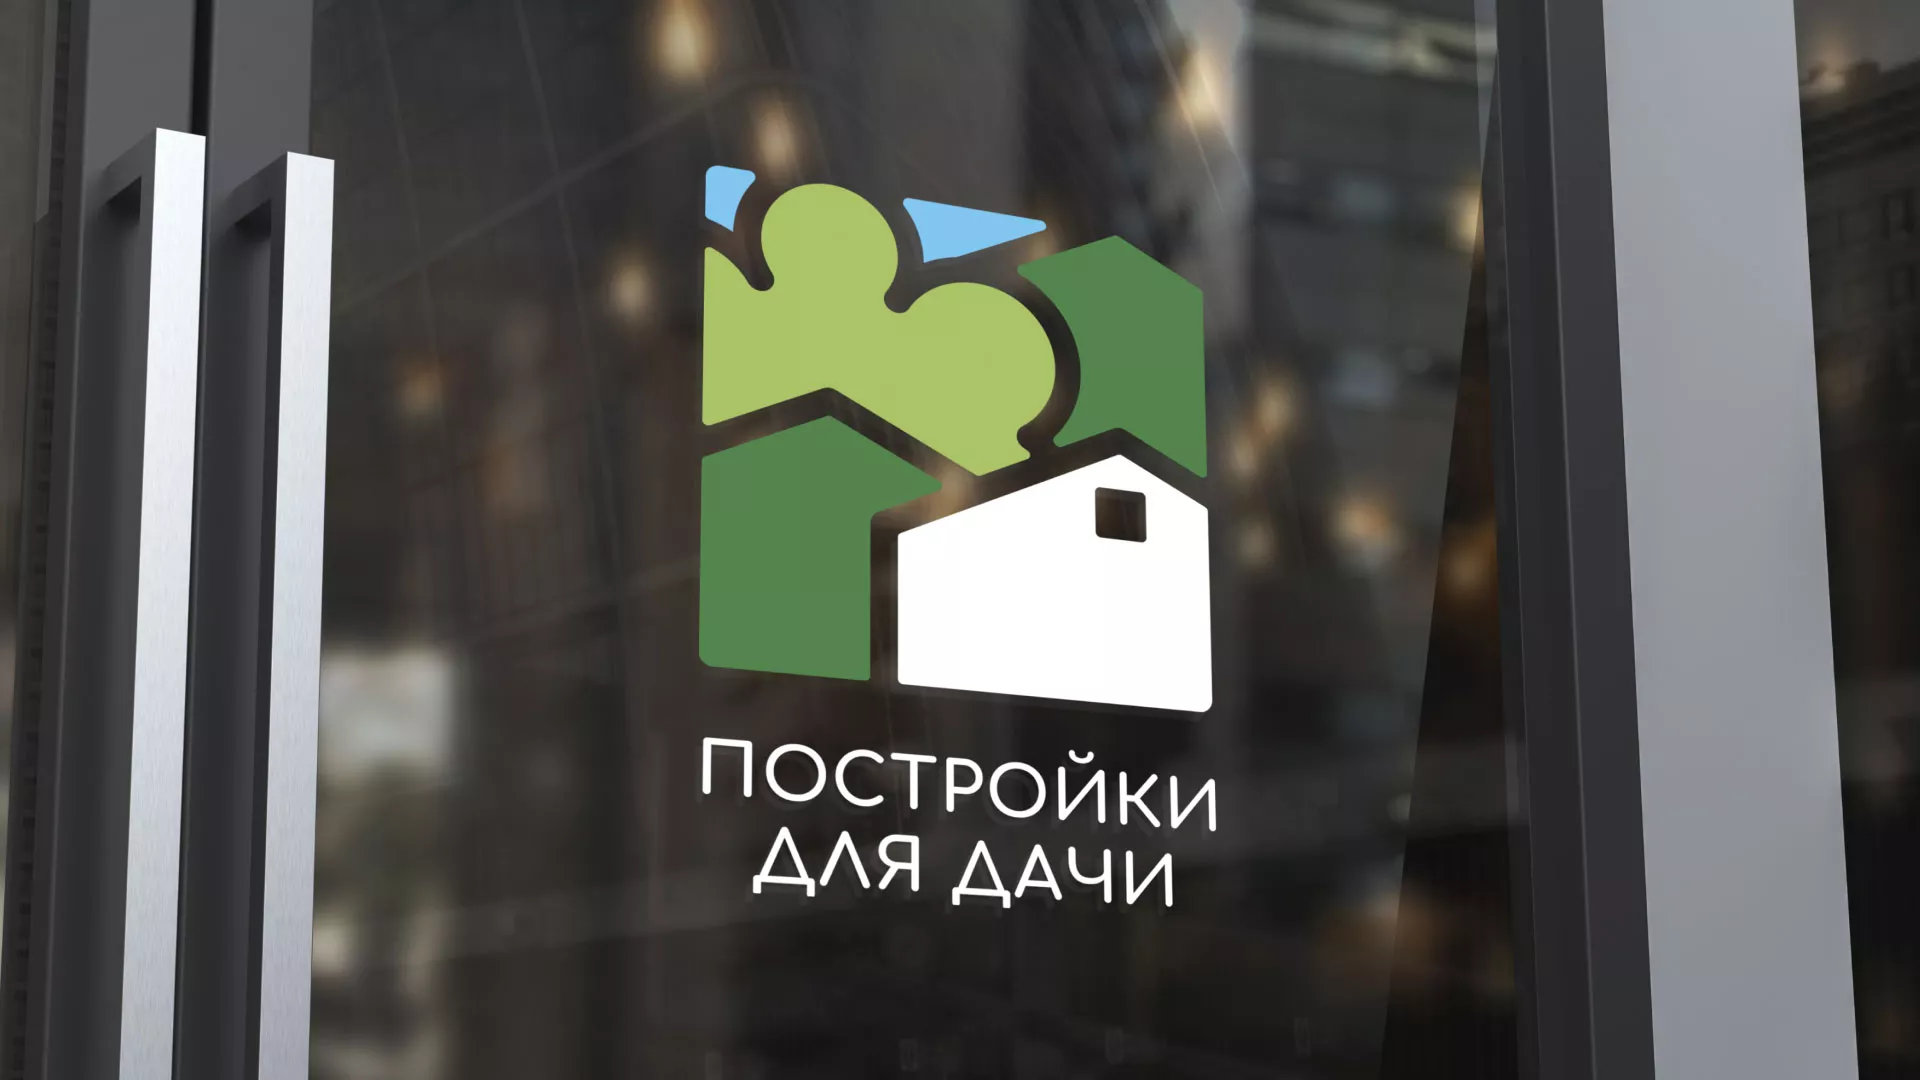 Разработка логотипа в Видном для компании «Постройки для дачи»